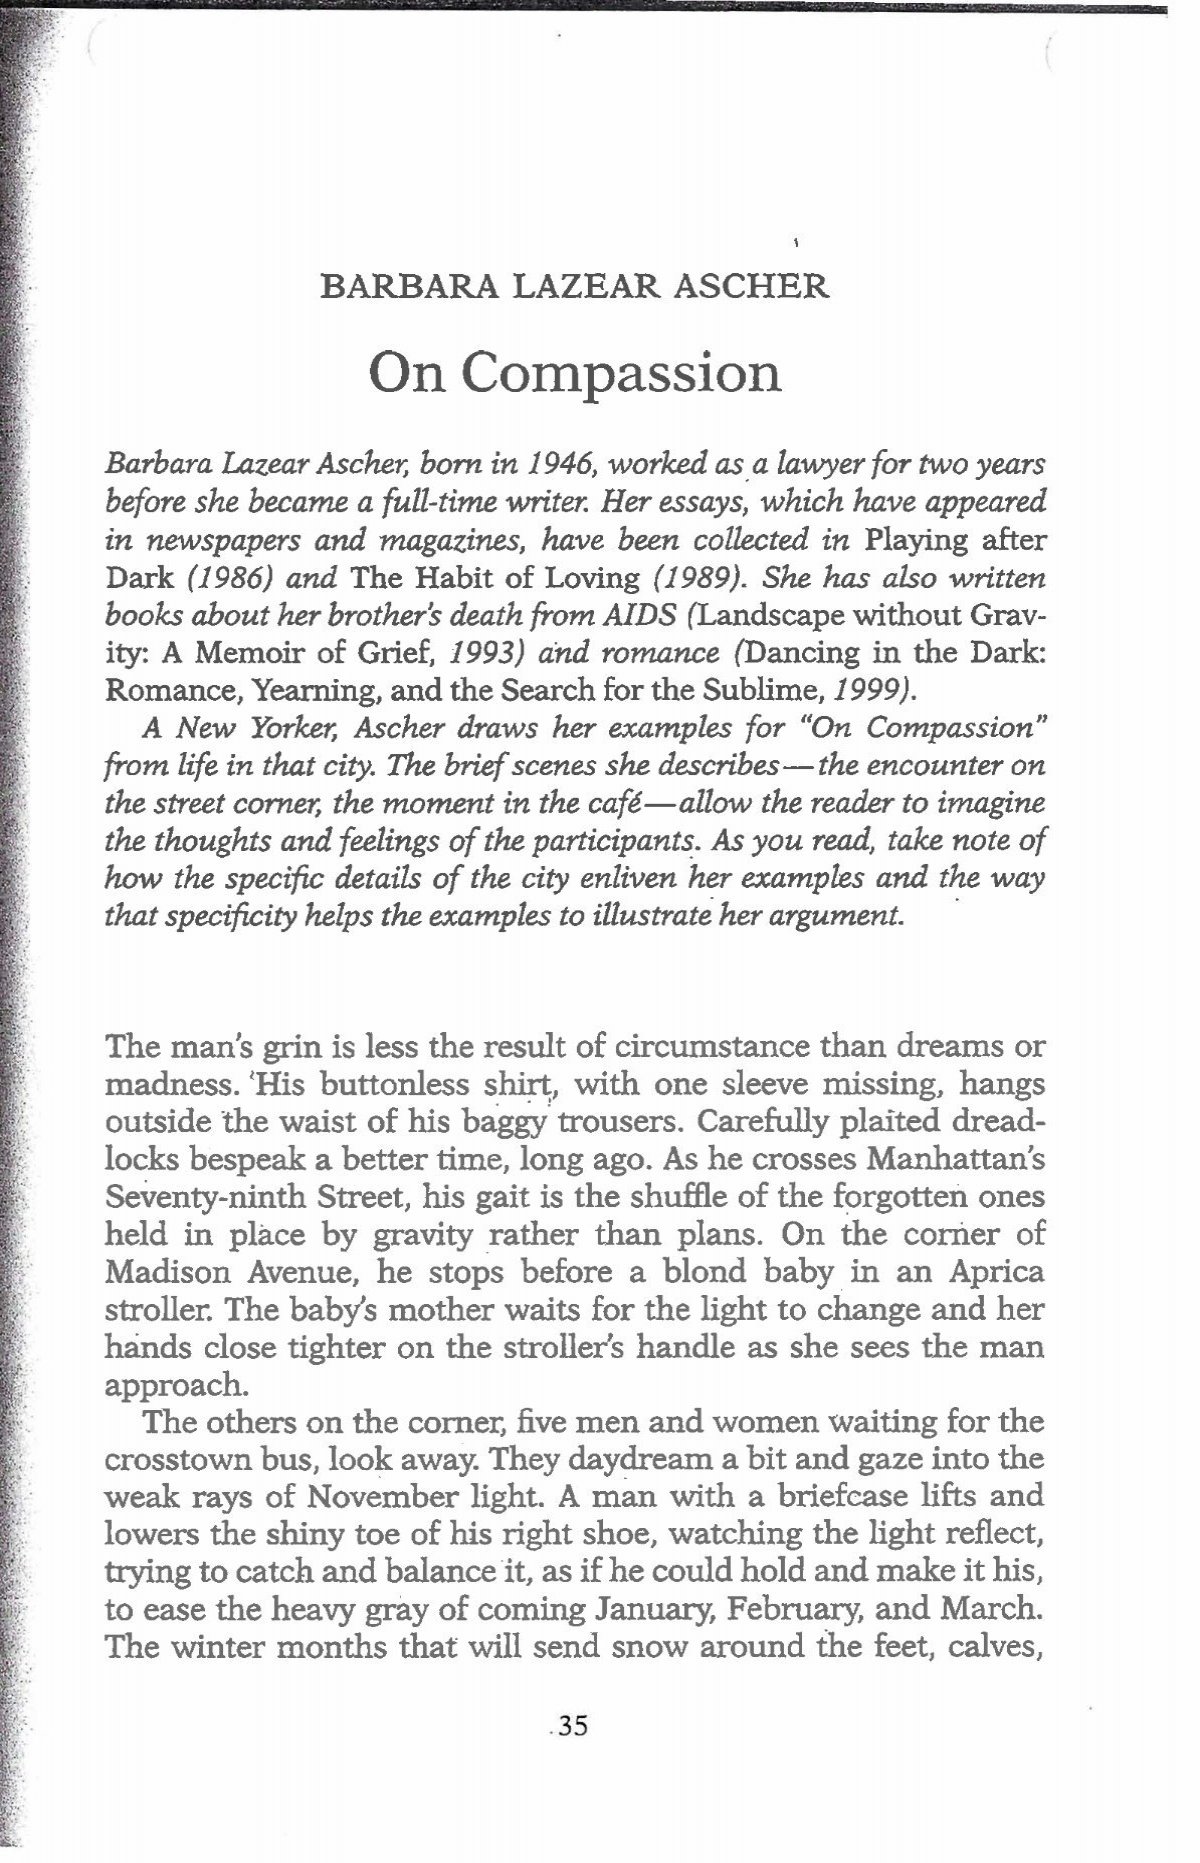 On compassion essays